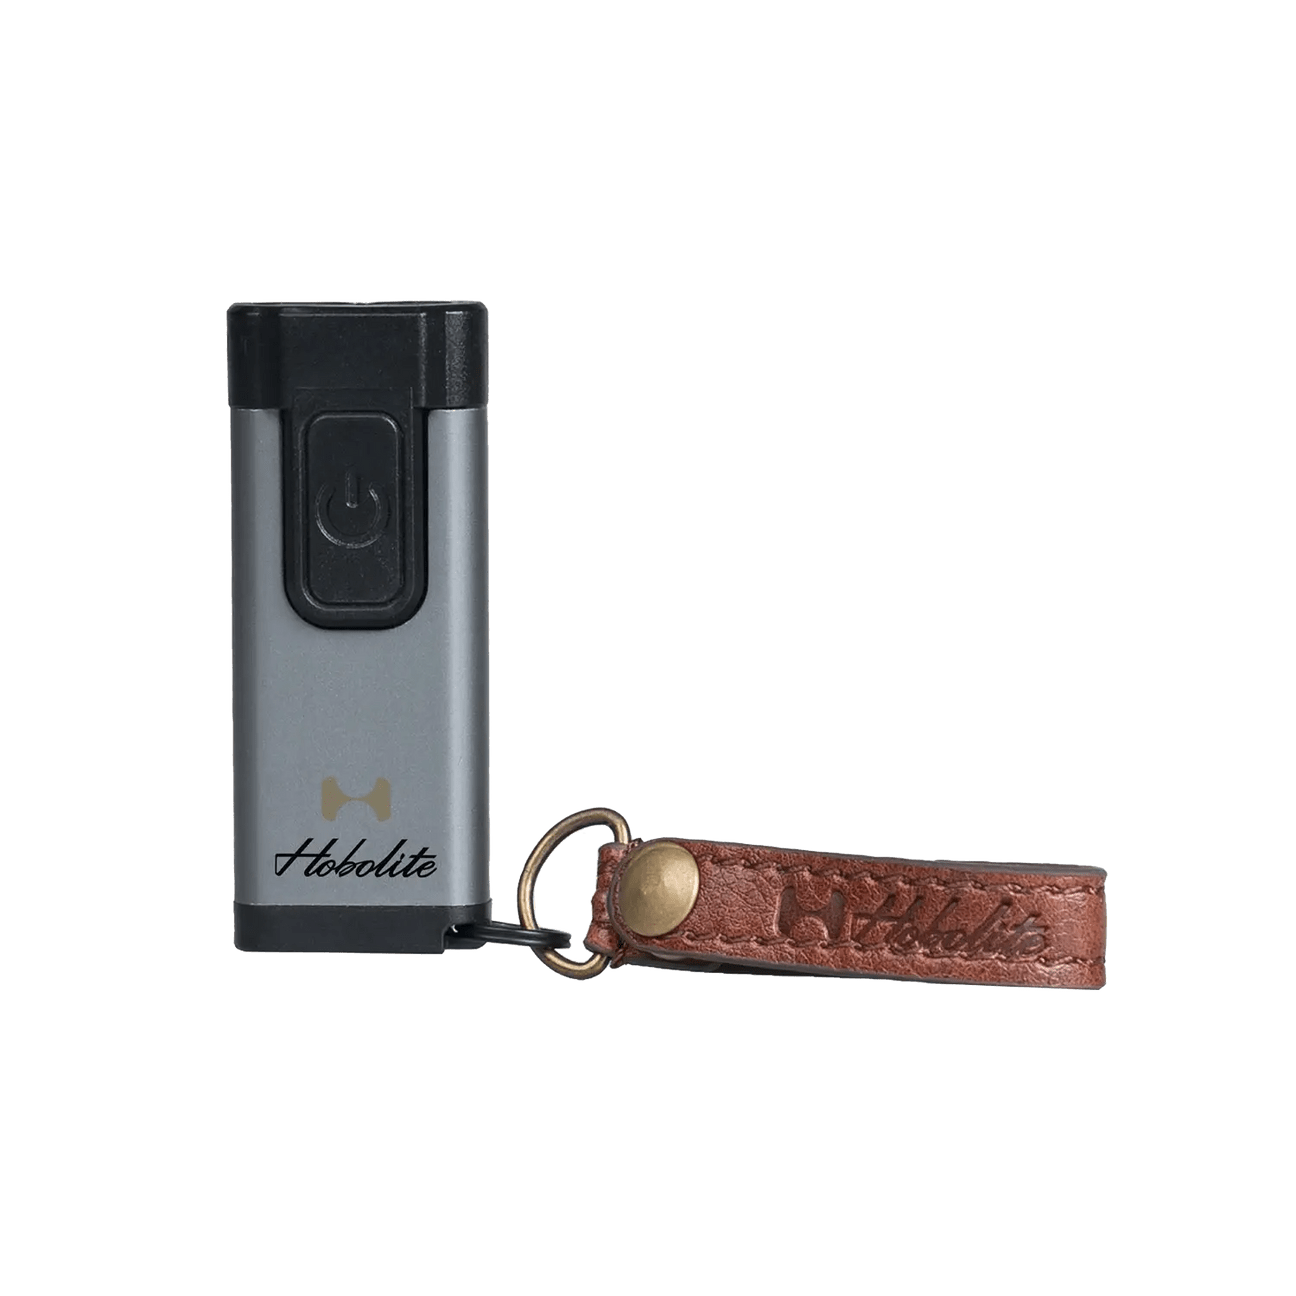 Hobolite Compact Keychain Light - B&C Camera